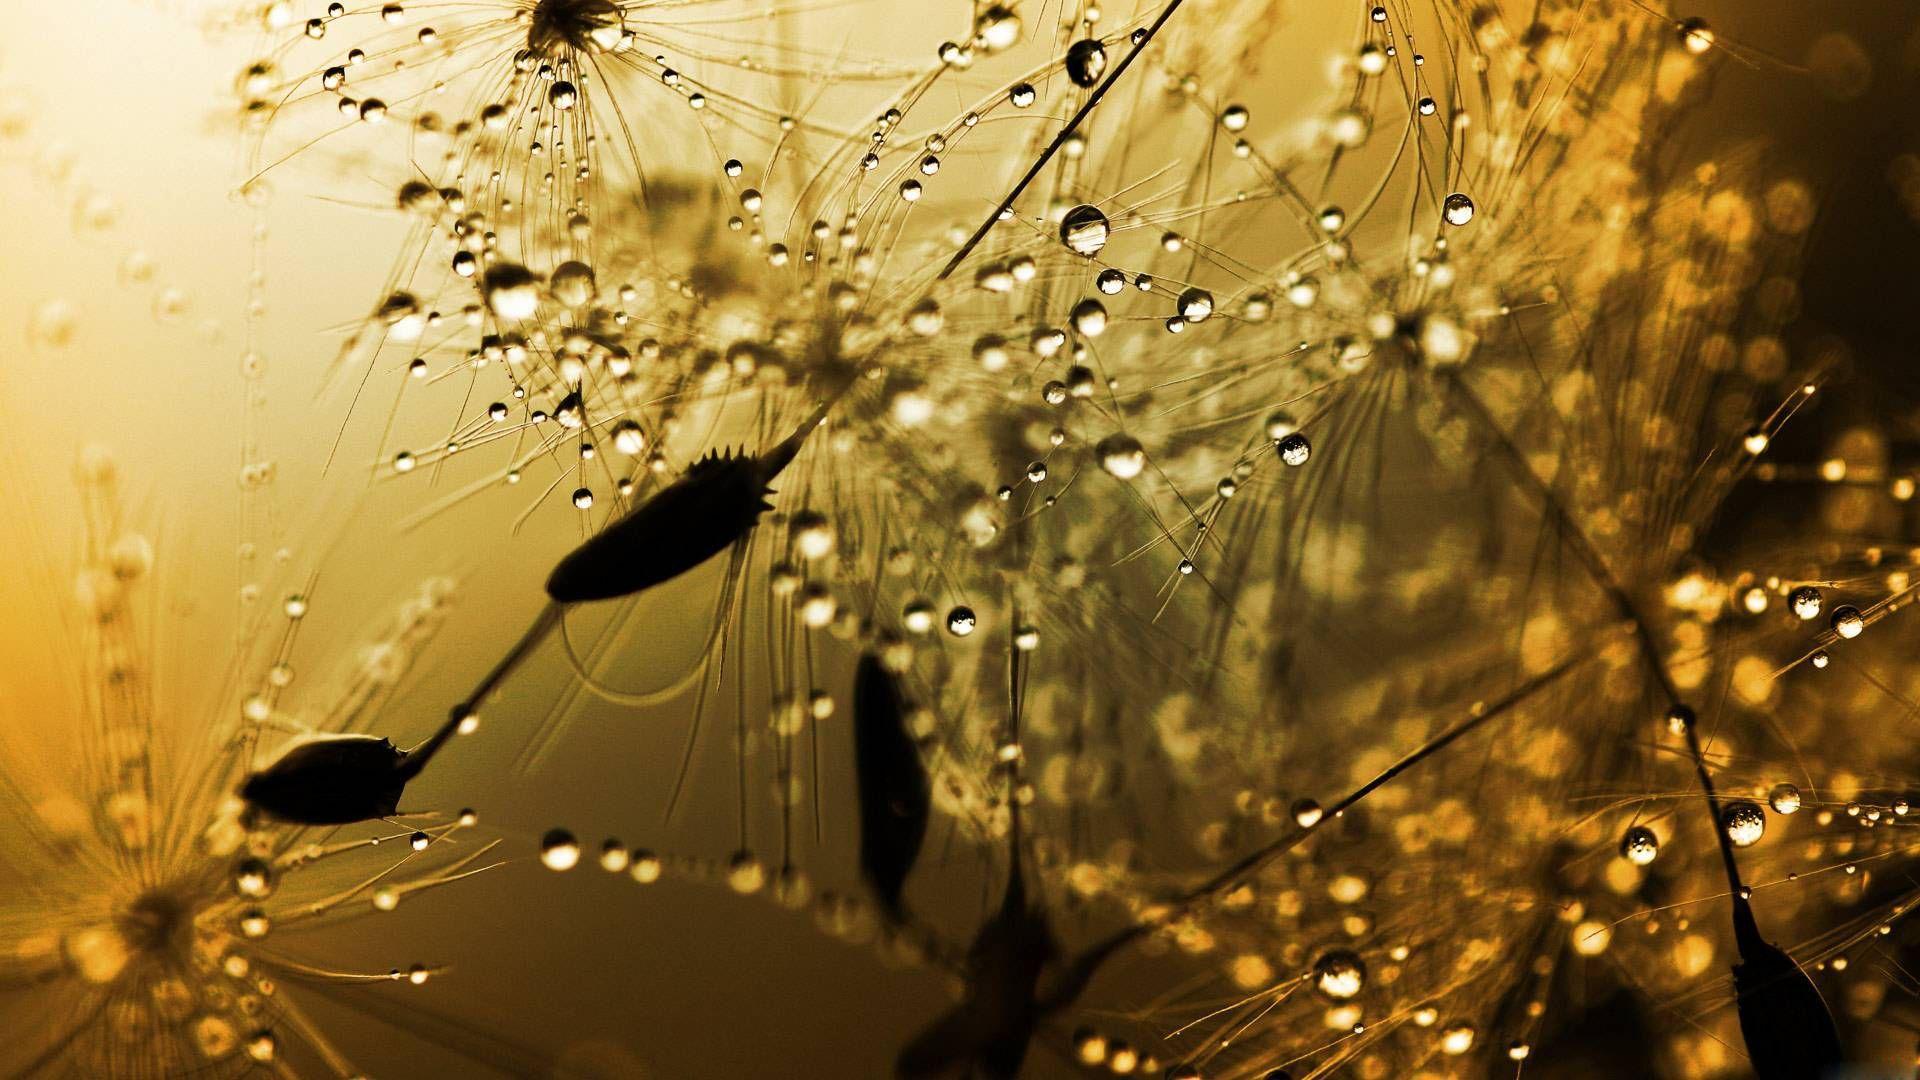 Beautiful Rain Image Wallpaper HD. Click download and you save this